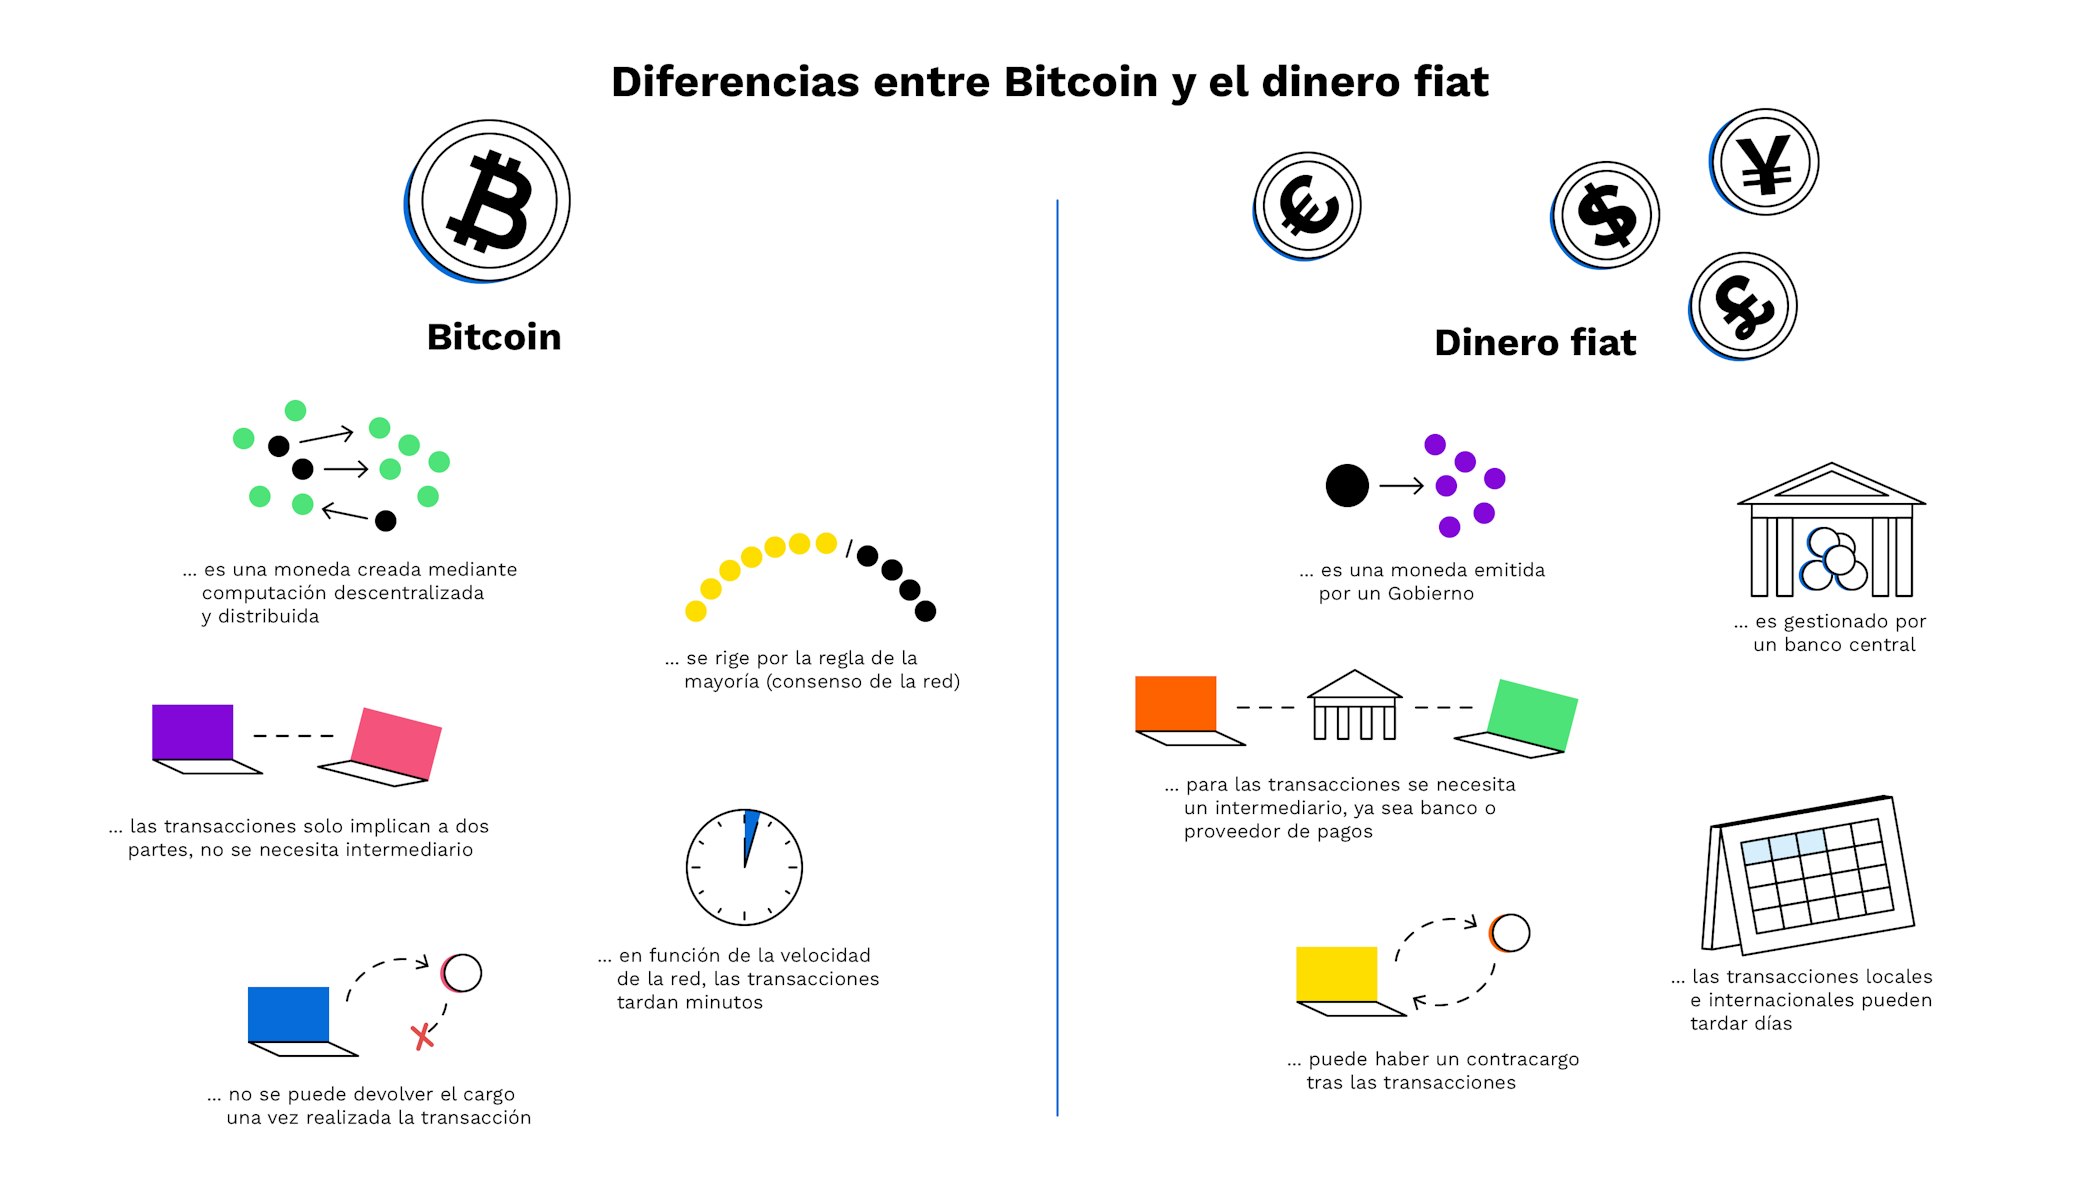 investitorii instituționali futures bitcoin mercatox bitcoin depozit